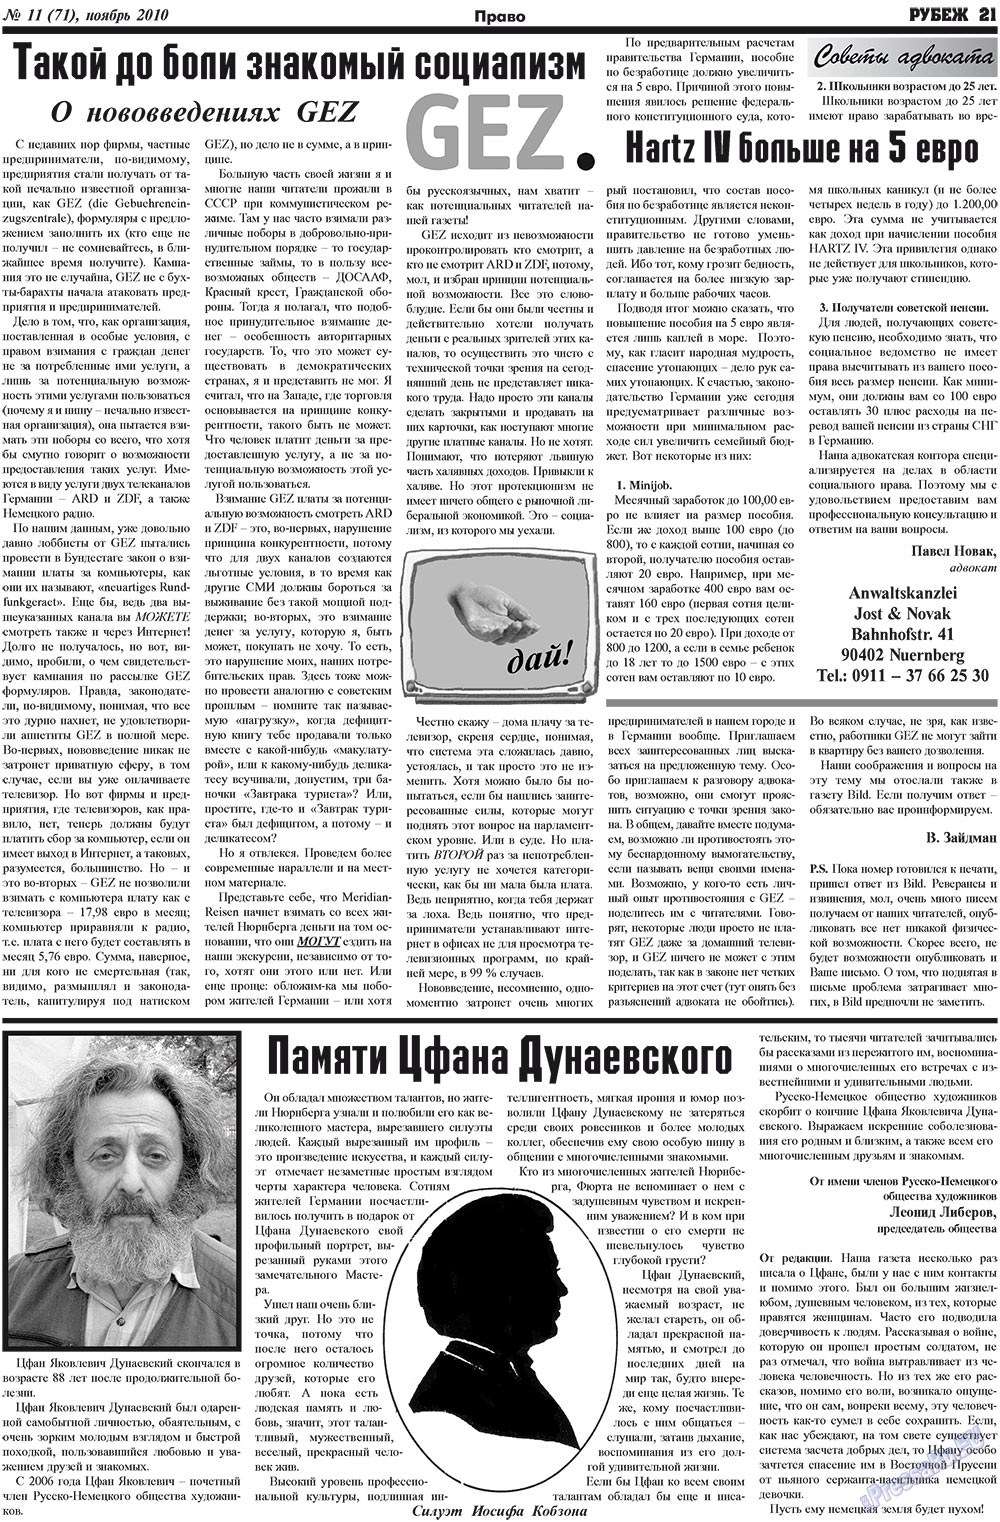 Рубеж, газета. 2010 №11 стр.21